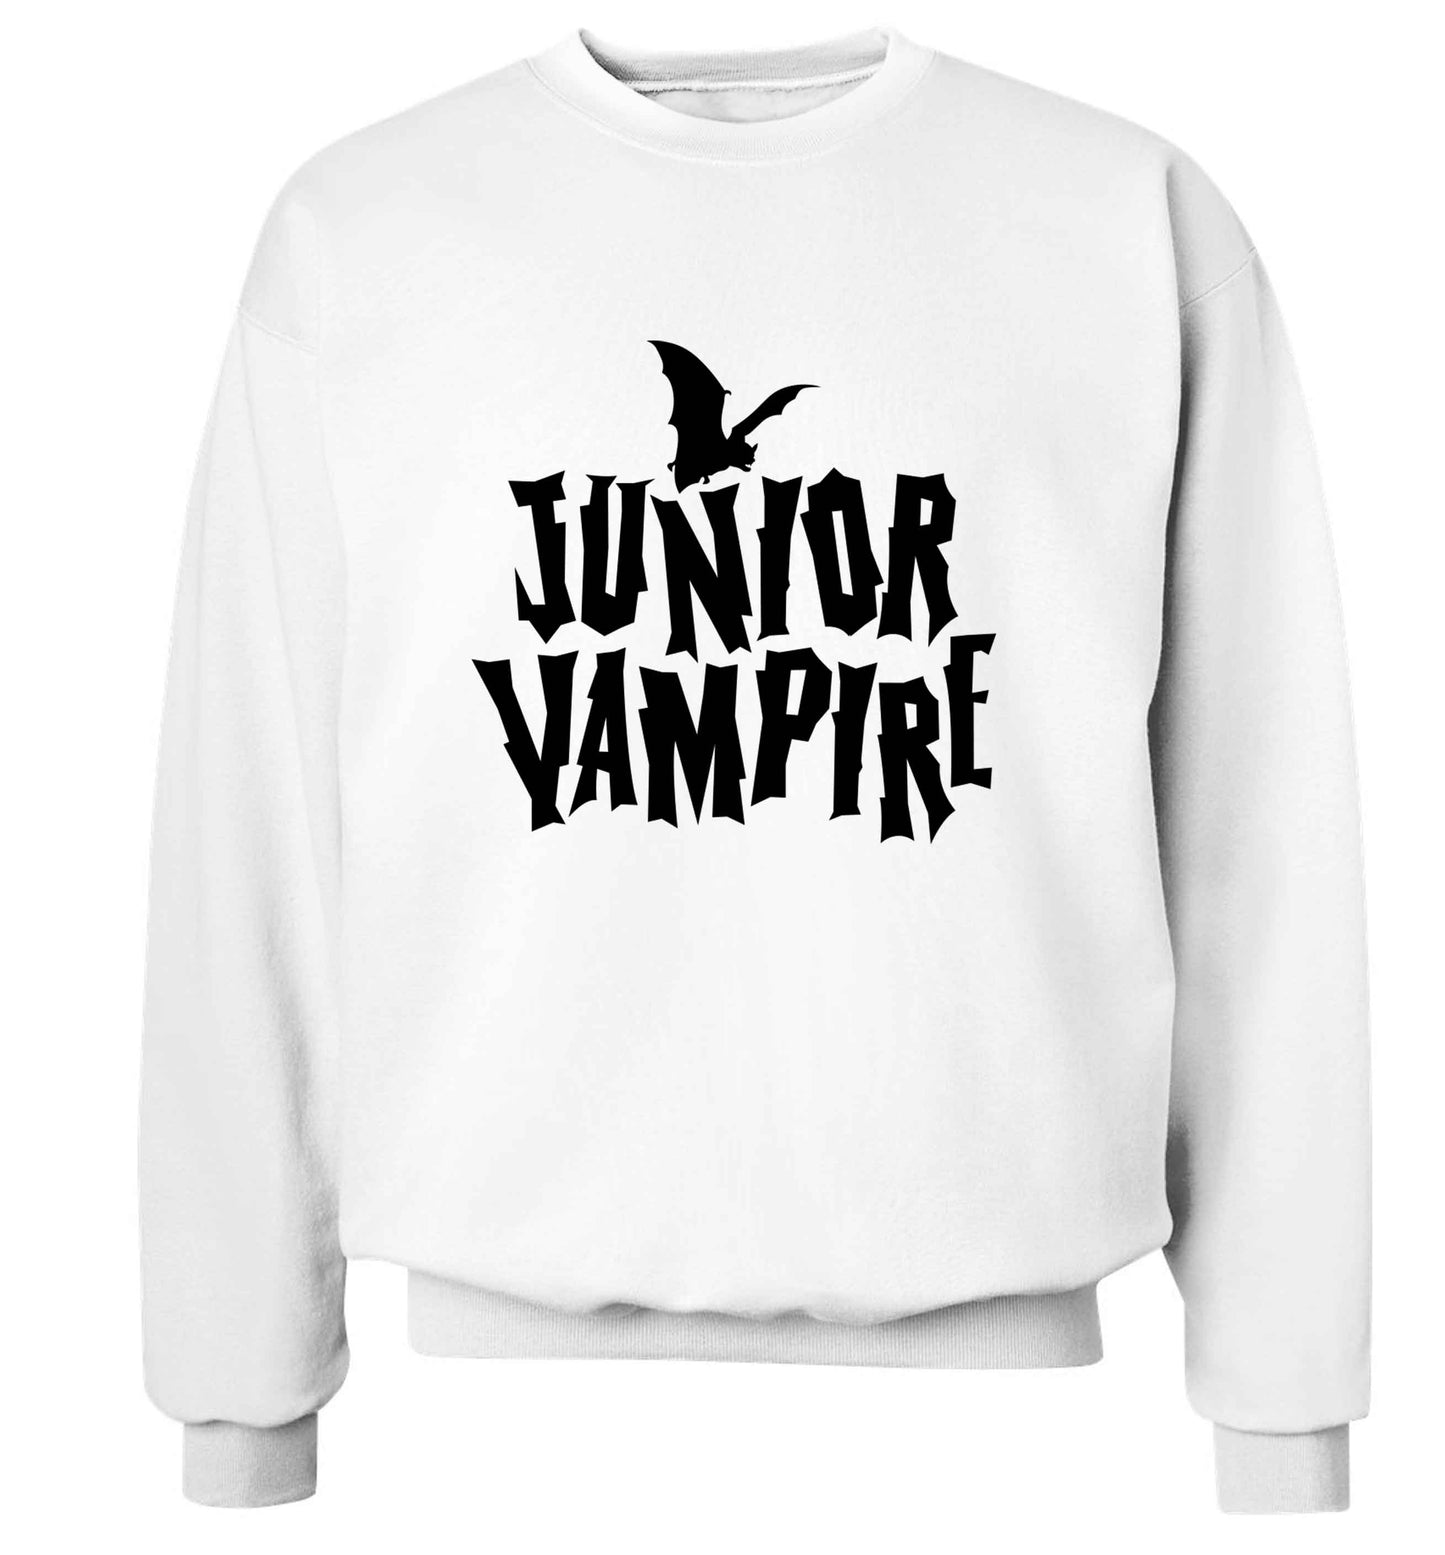 Junior vampire adult's unisex white sweater 2XL